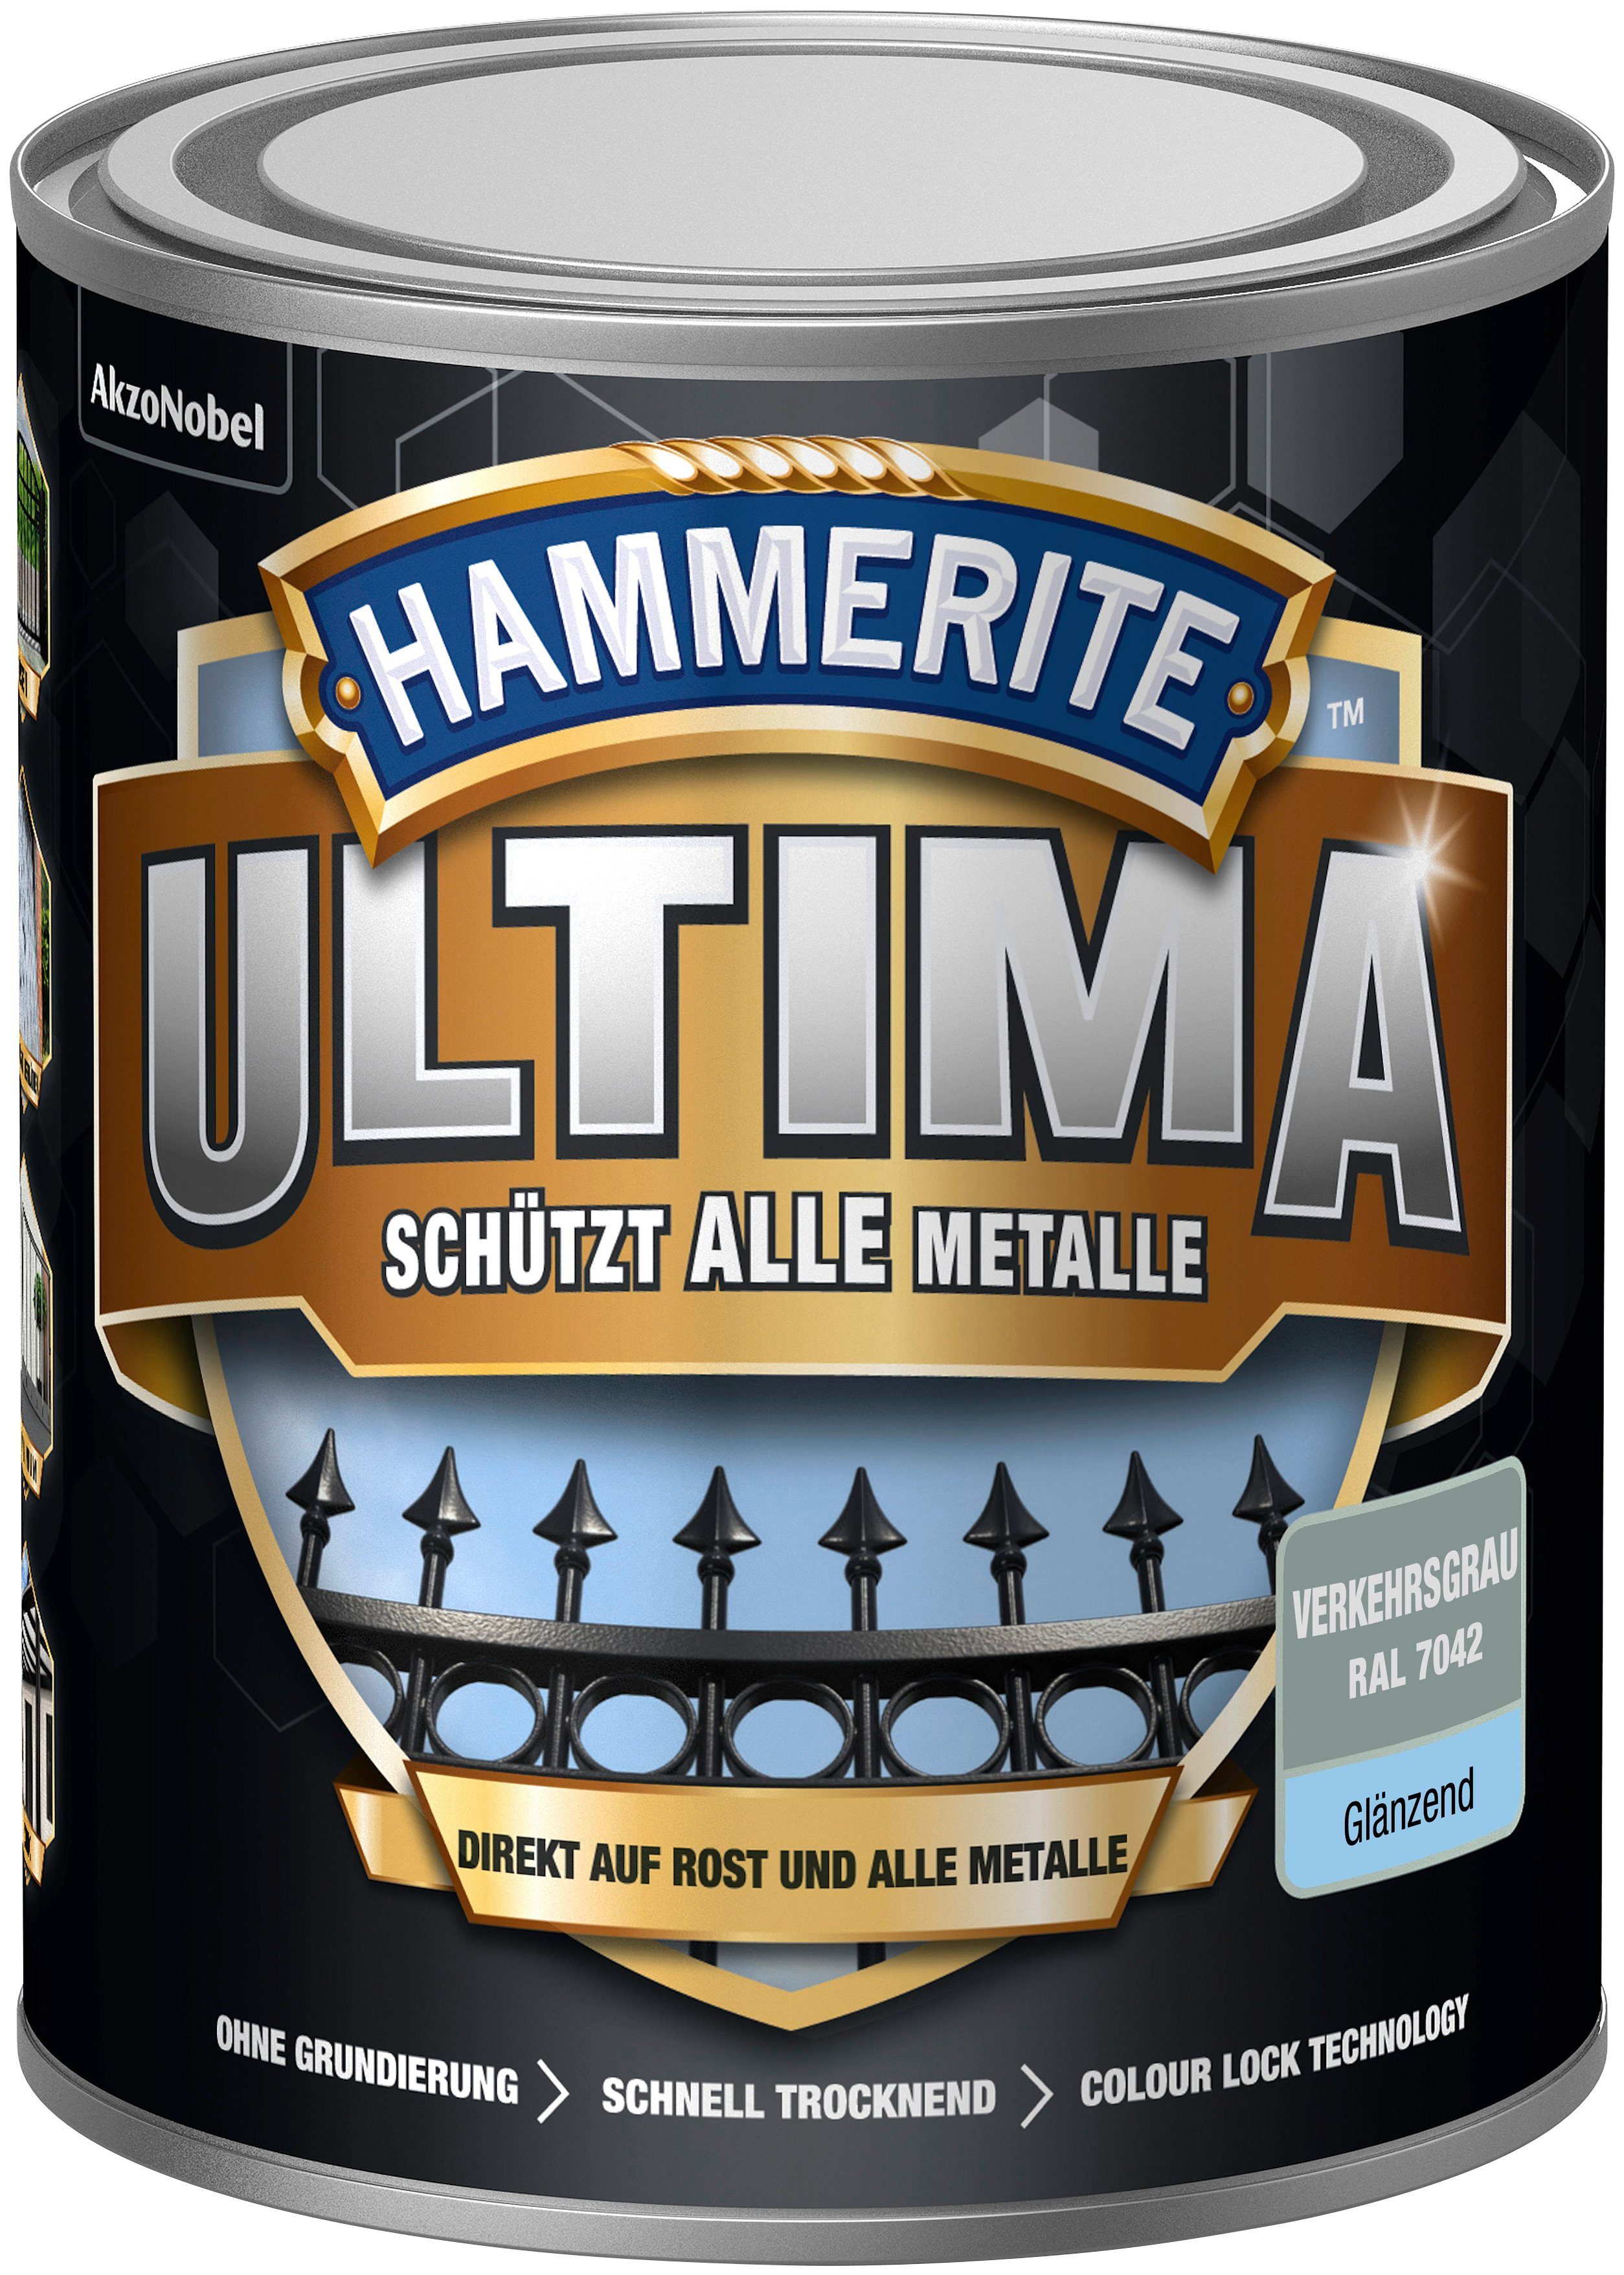 Hammerite  verkehrsgrau Metallschutzlack verkehrsgrau ULTIMA Metalle, alle glänzend 7042 schützt 3in1, RAL7042, RAL glänzend